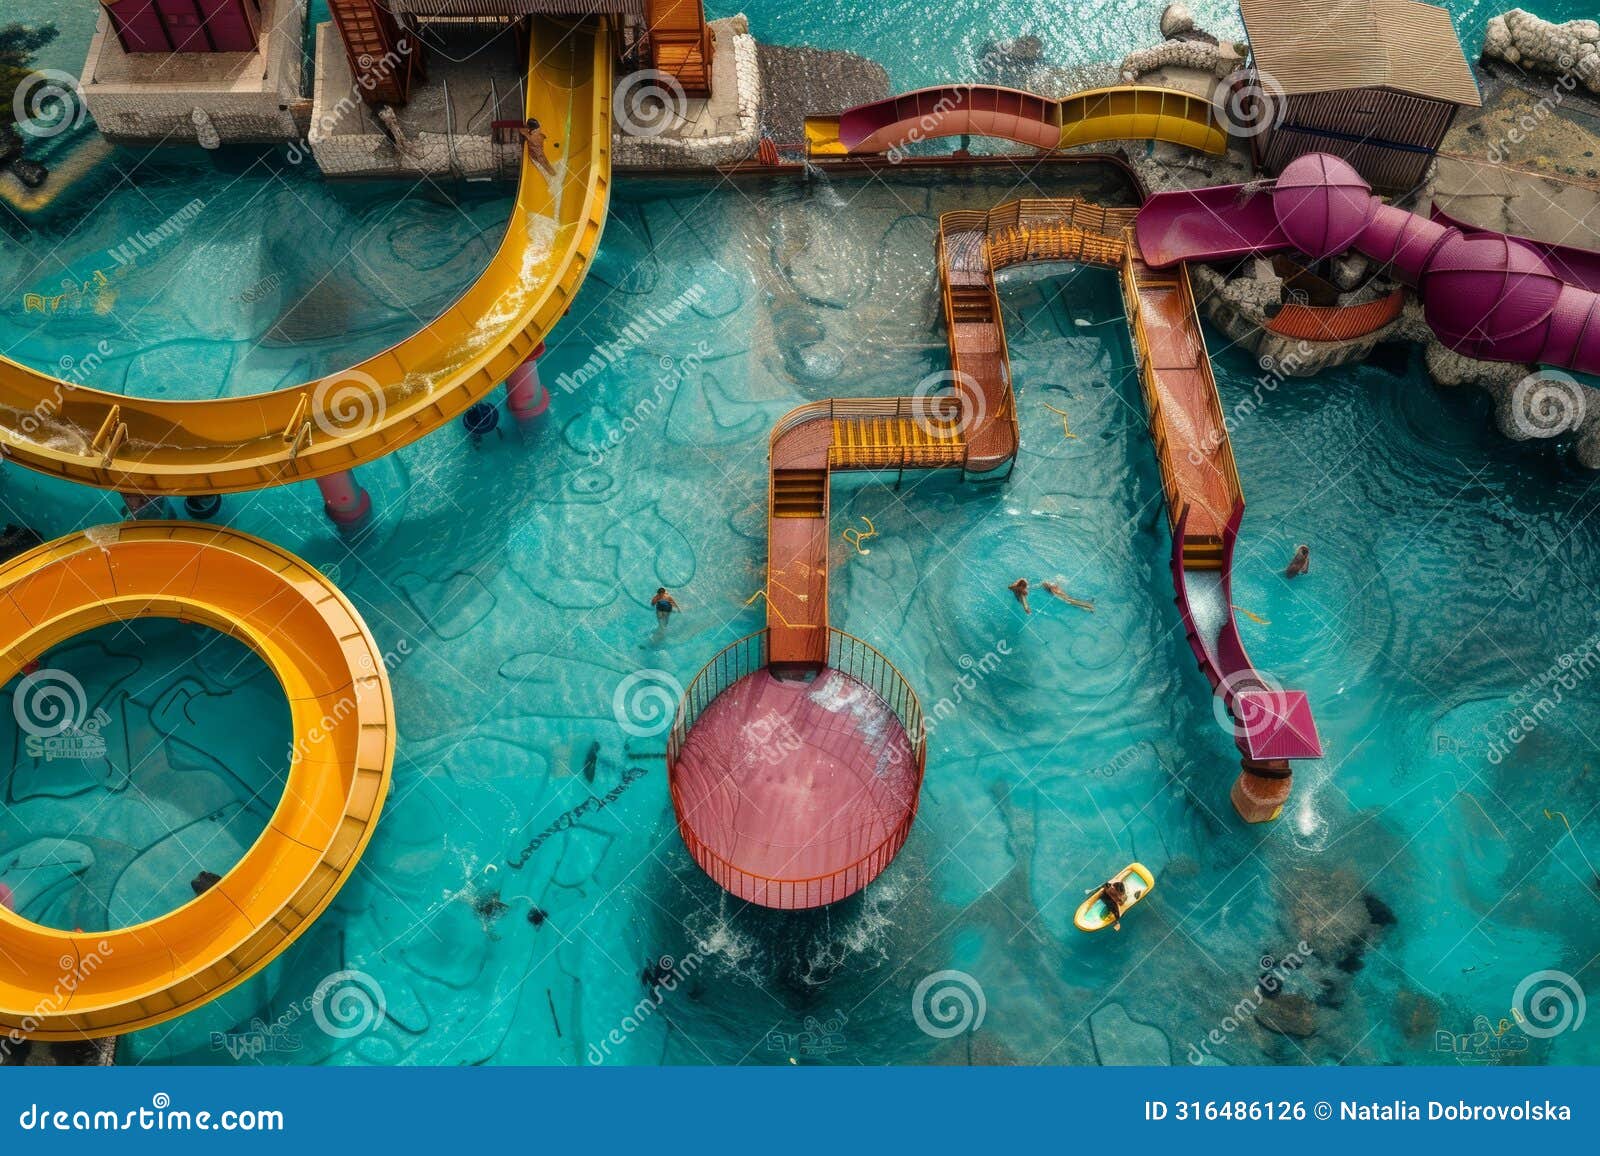 thrilling aqua park adventure with slides, pools, and splashes.